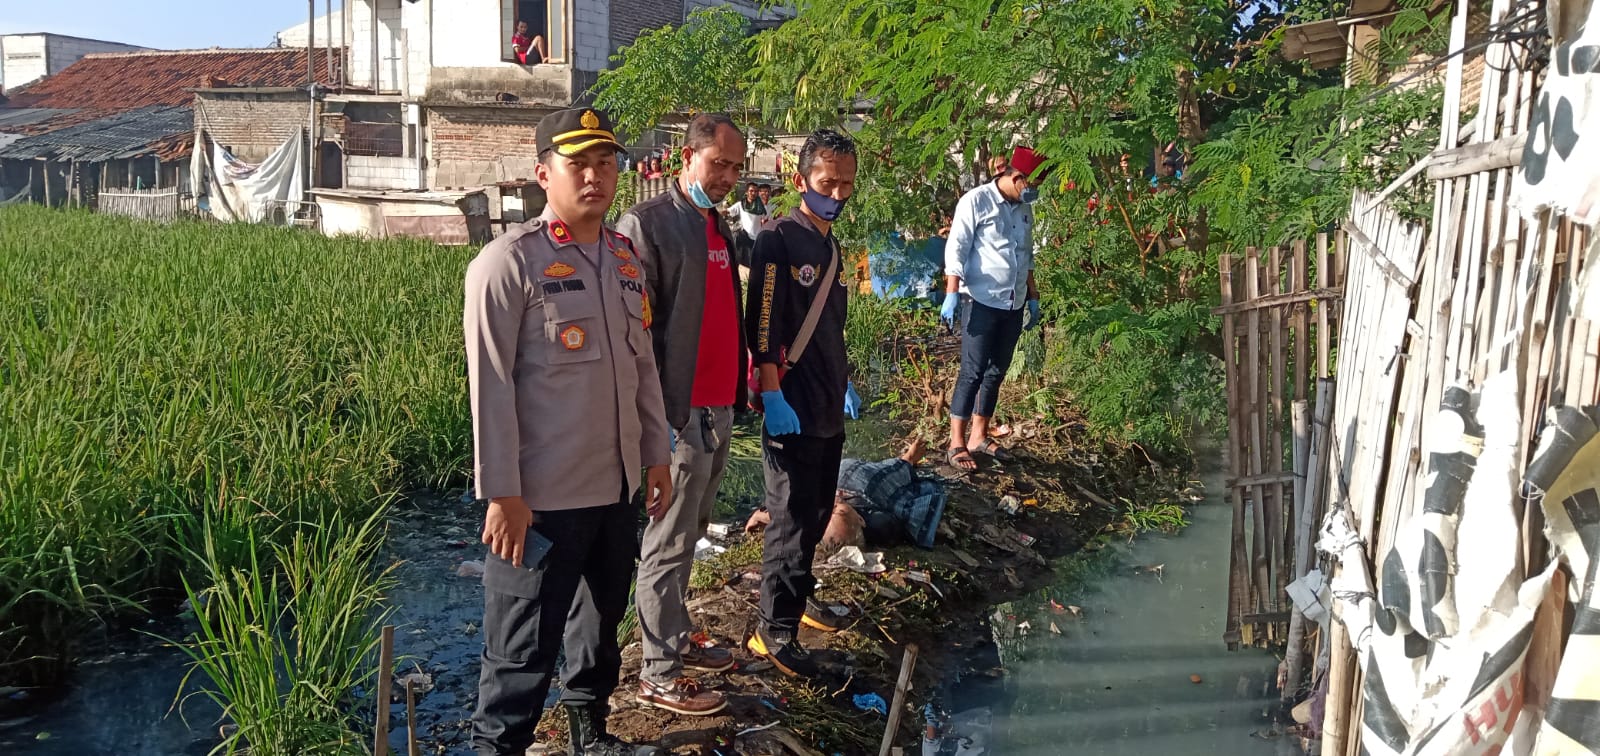 Mayat Berkaos Jordan Tergeletak di Persawahan Kota Tangerang